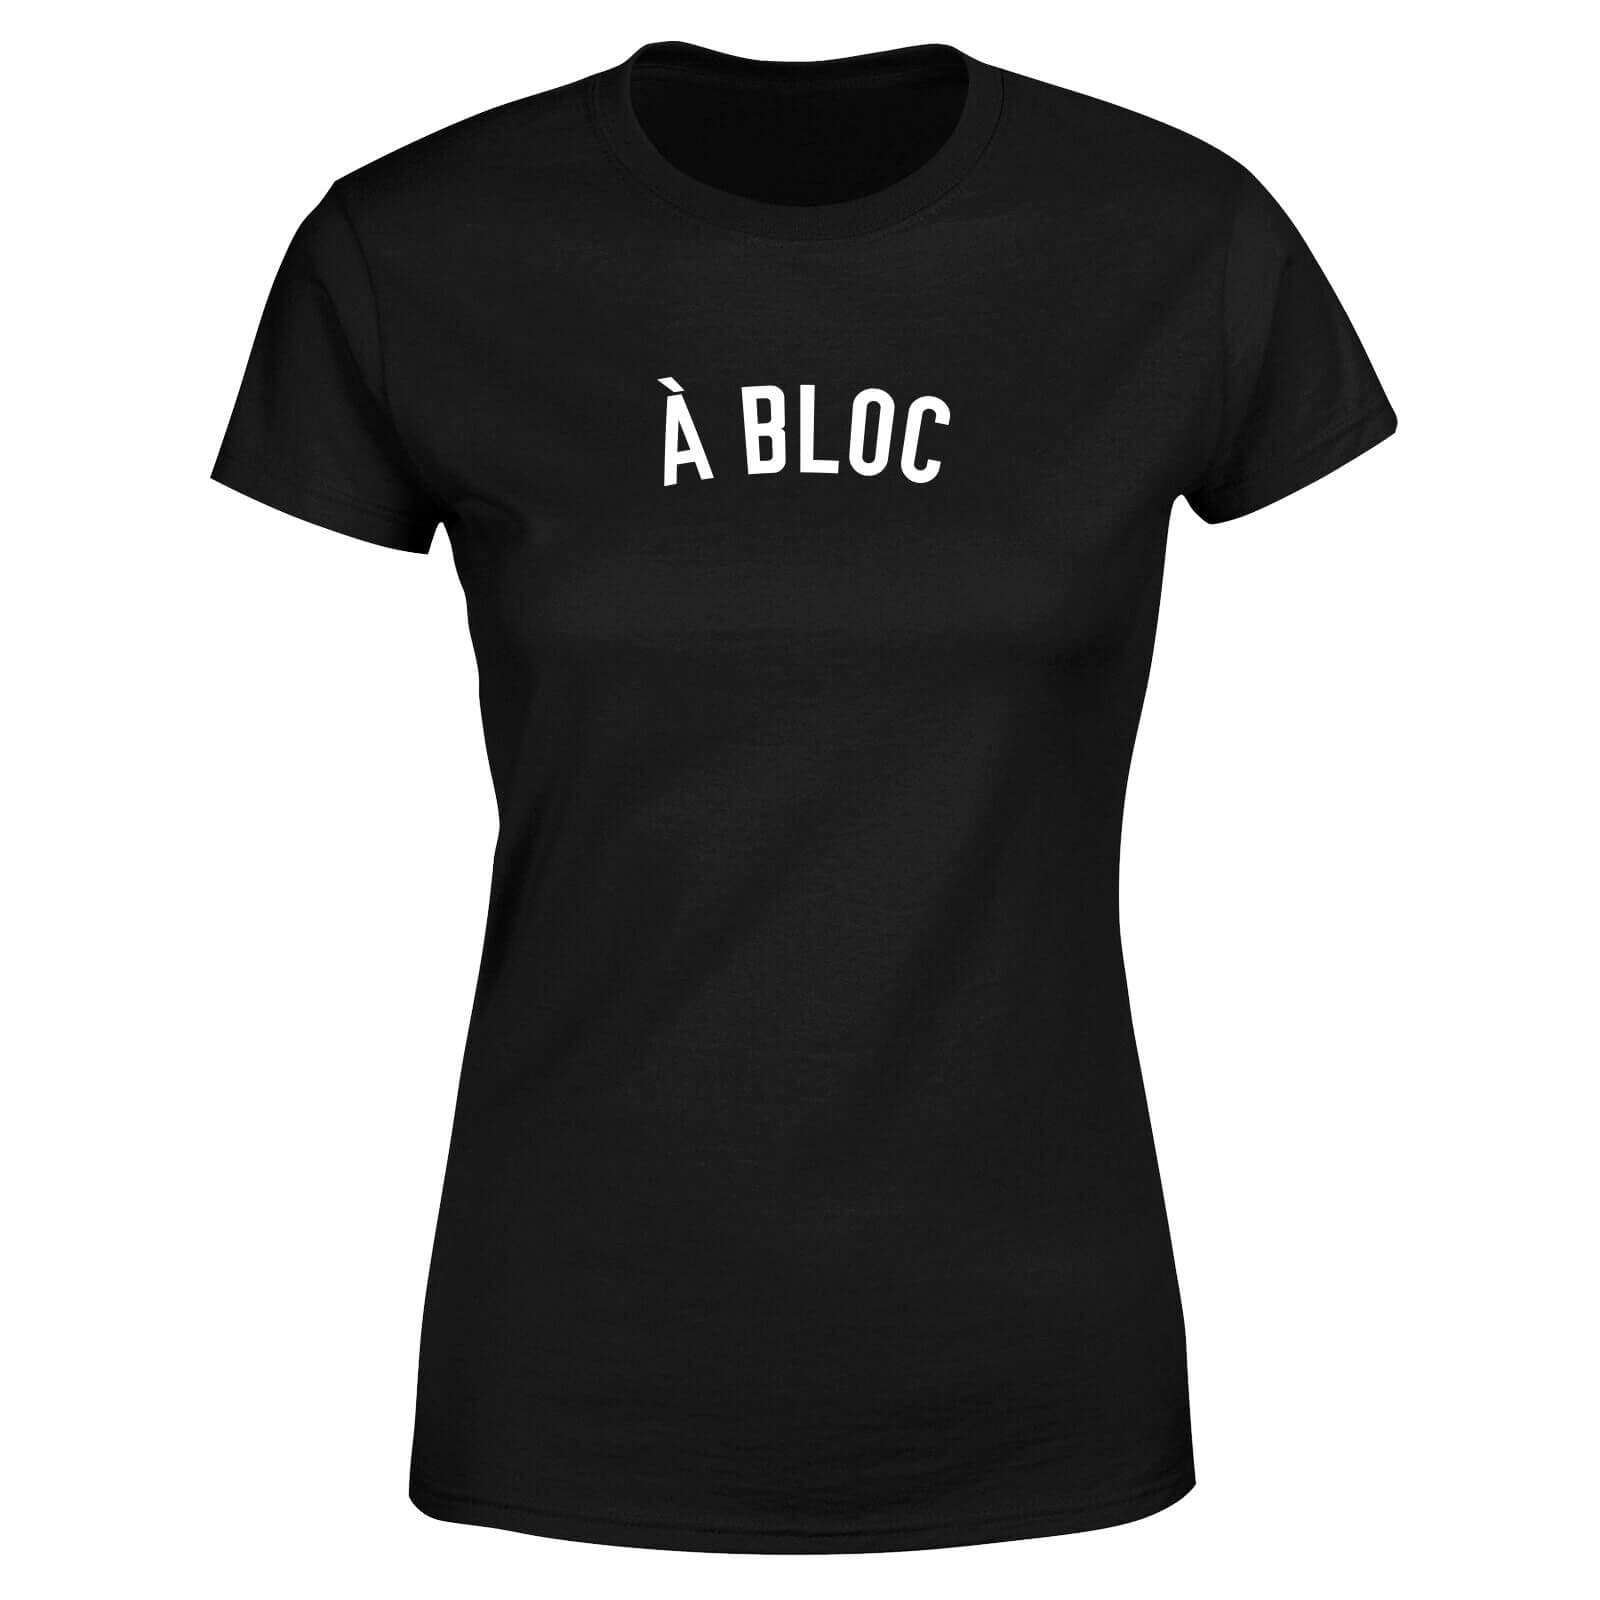 A Bloc Women's T-Shirt - Black - L - Black